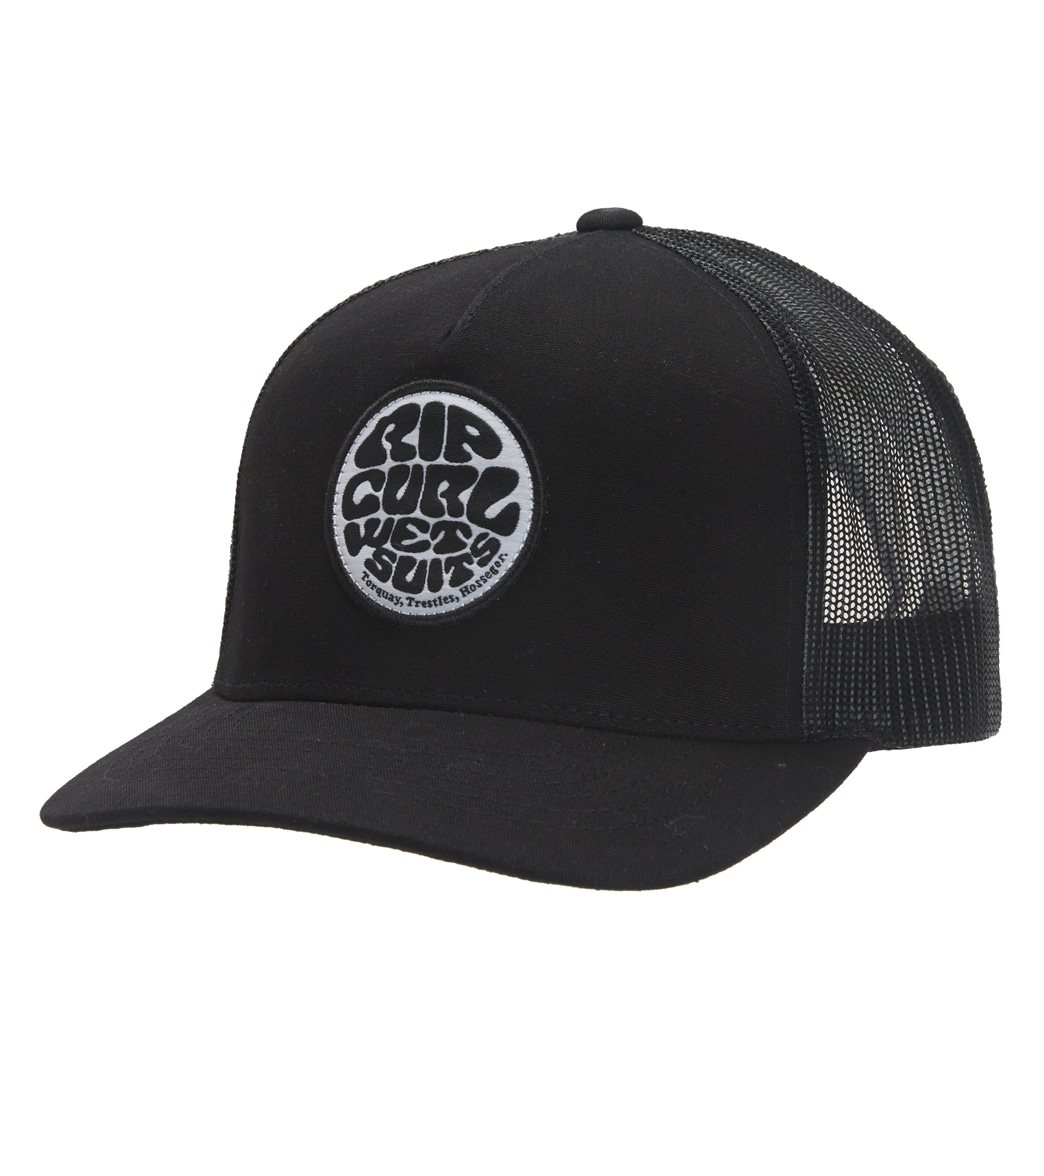 Rip Curl Men's Icons Eco Trucker Hat - Black/White One Size - Swimoutlet.com